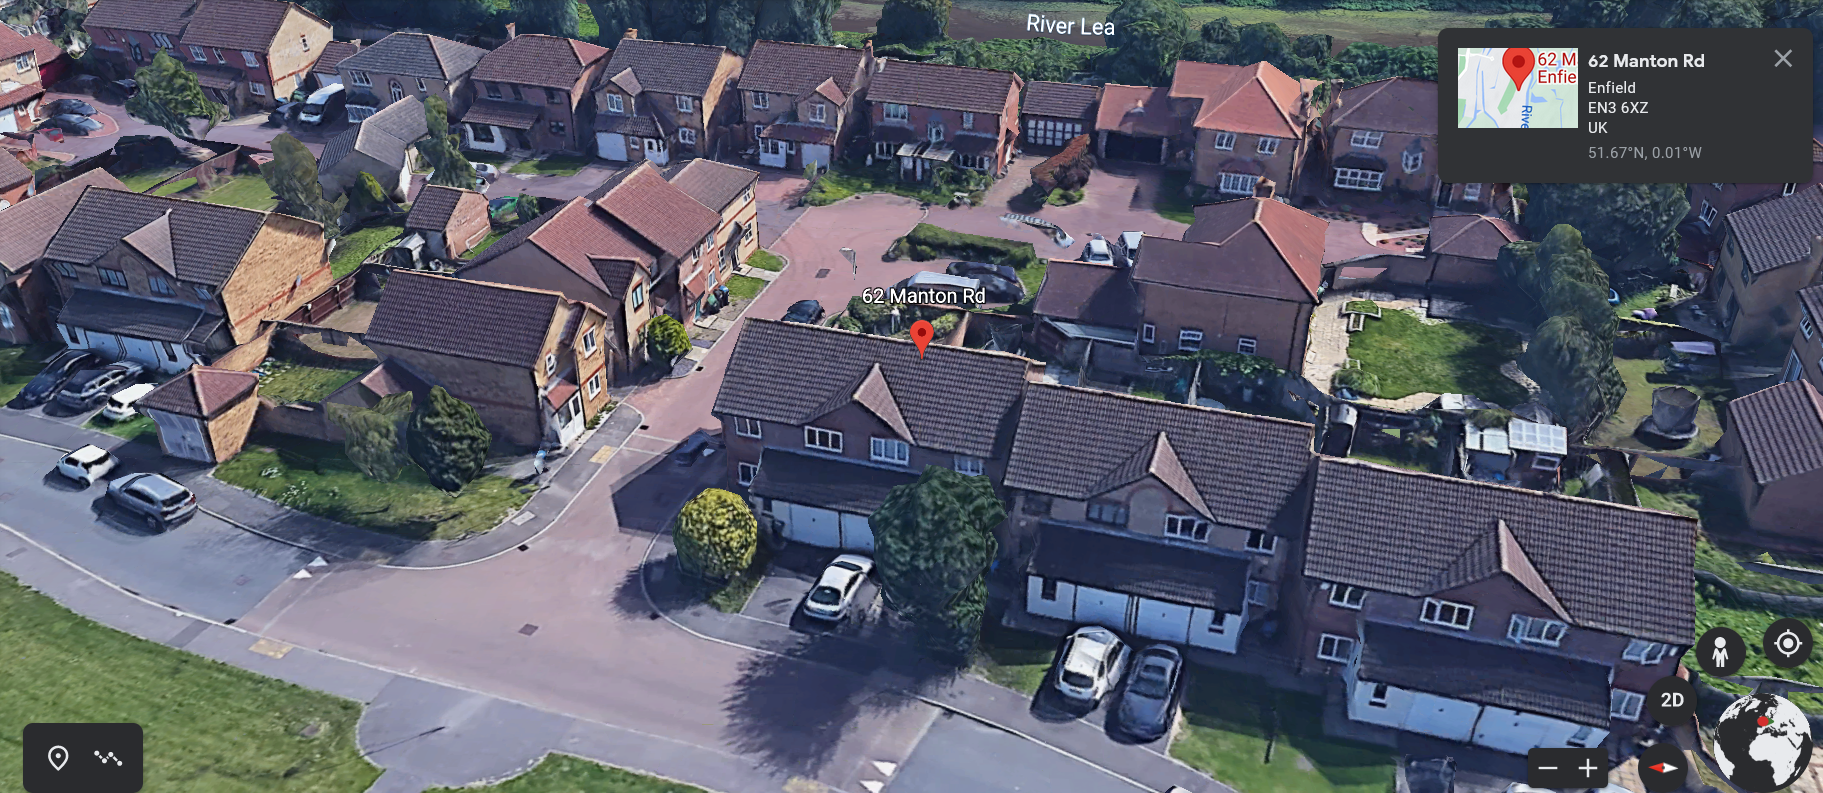 Google Earth image of 62, Manton Road, Enfield, London EN3 6XZ